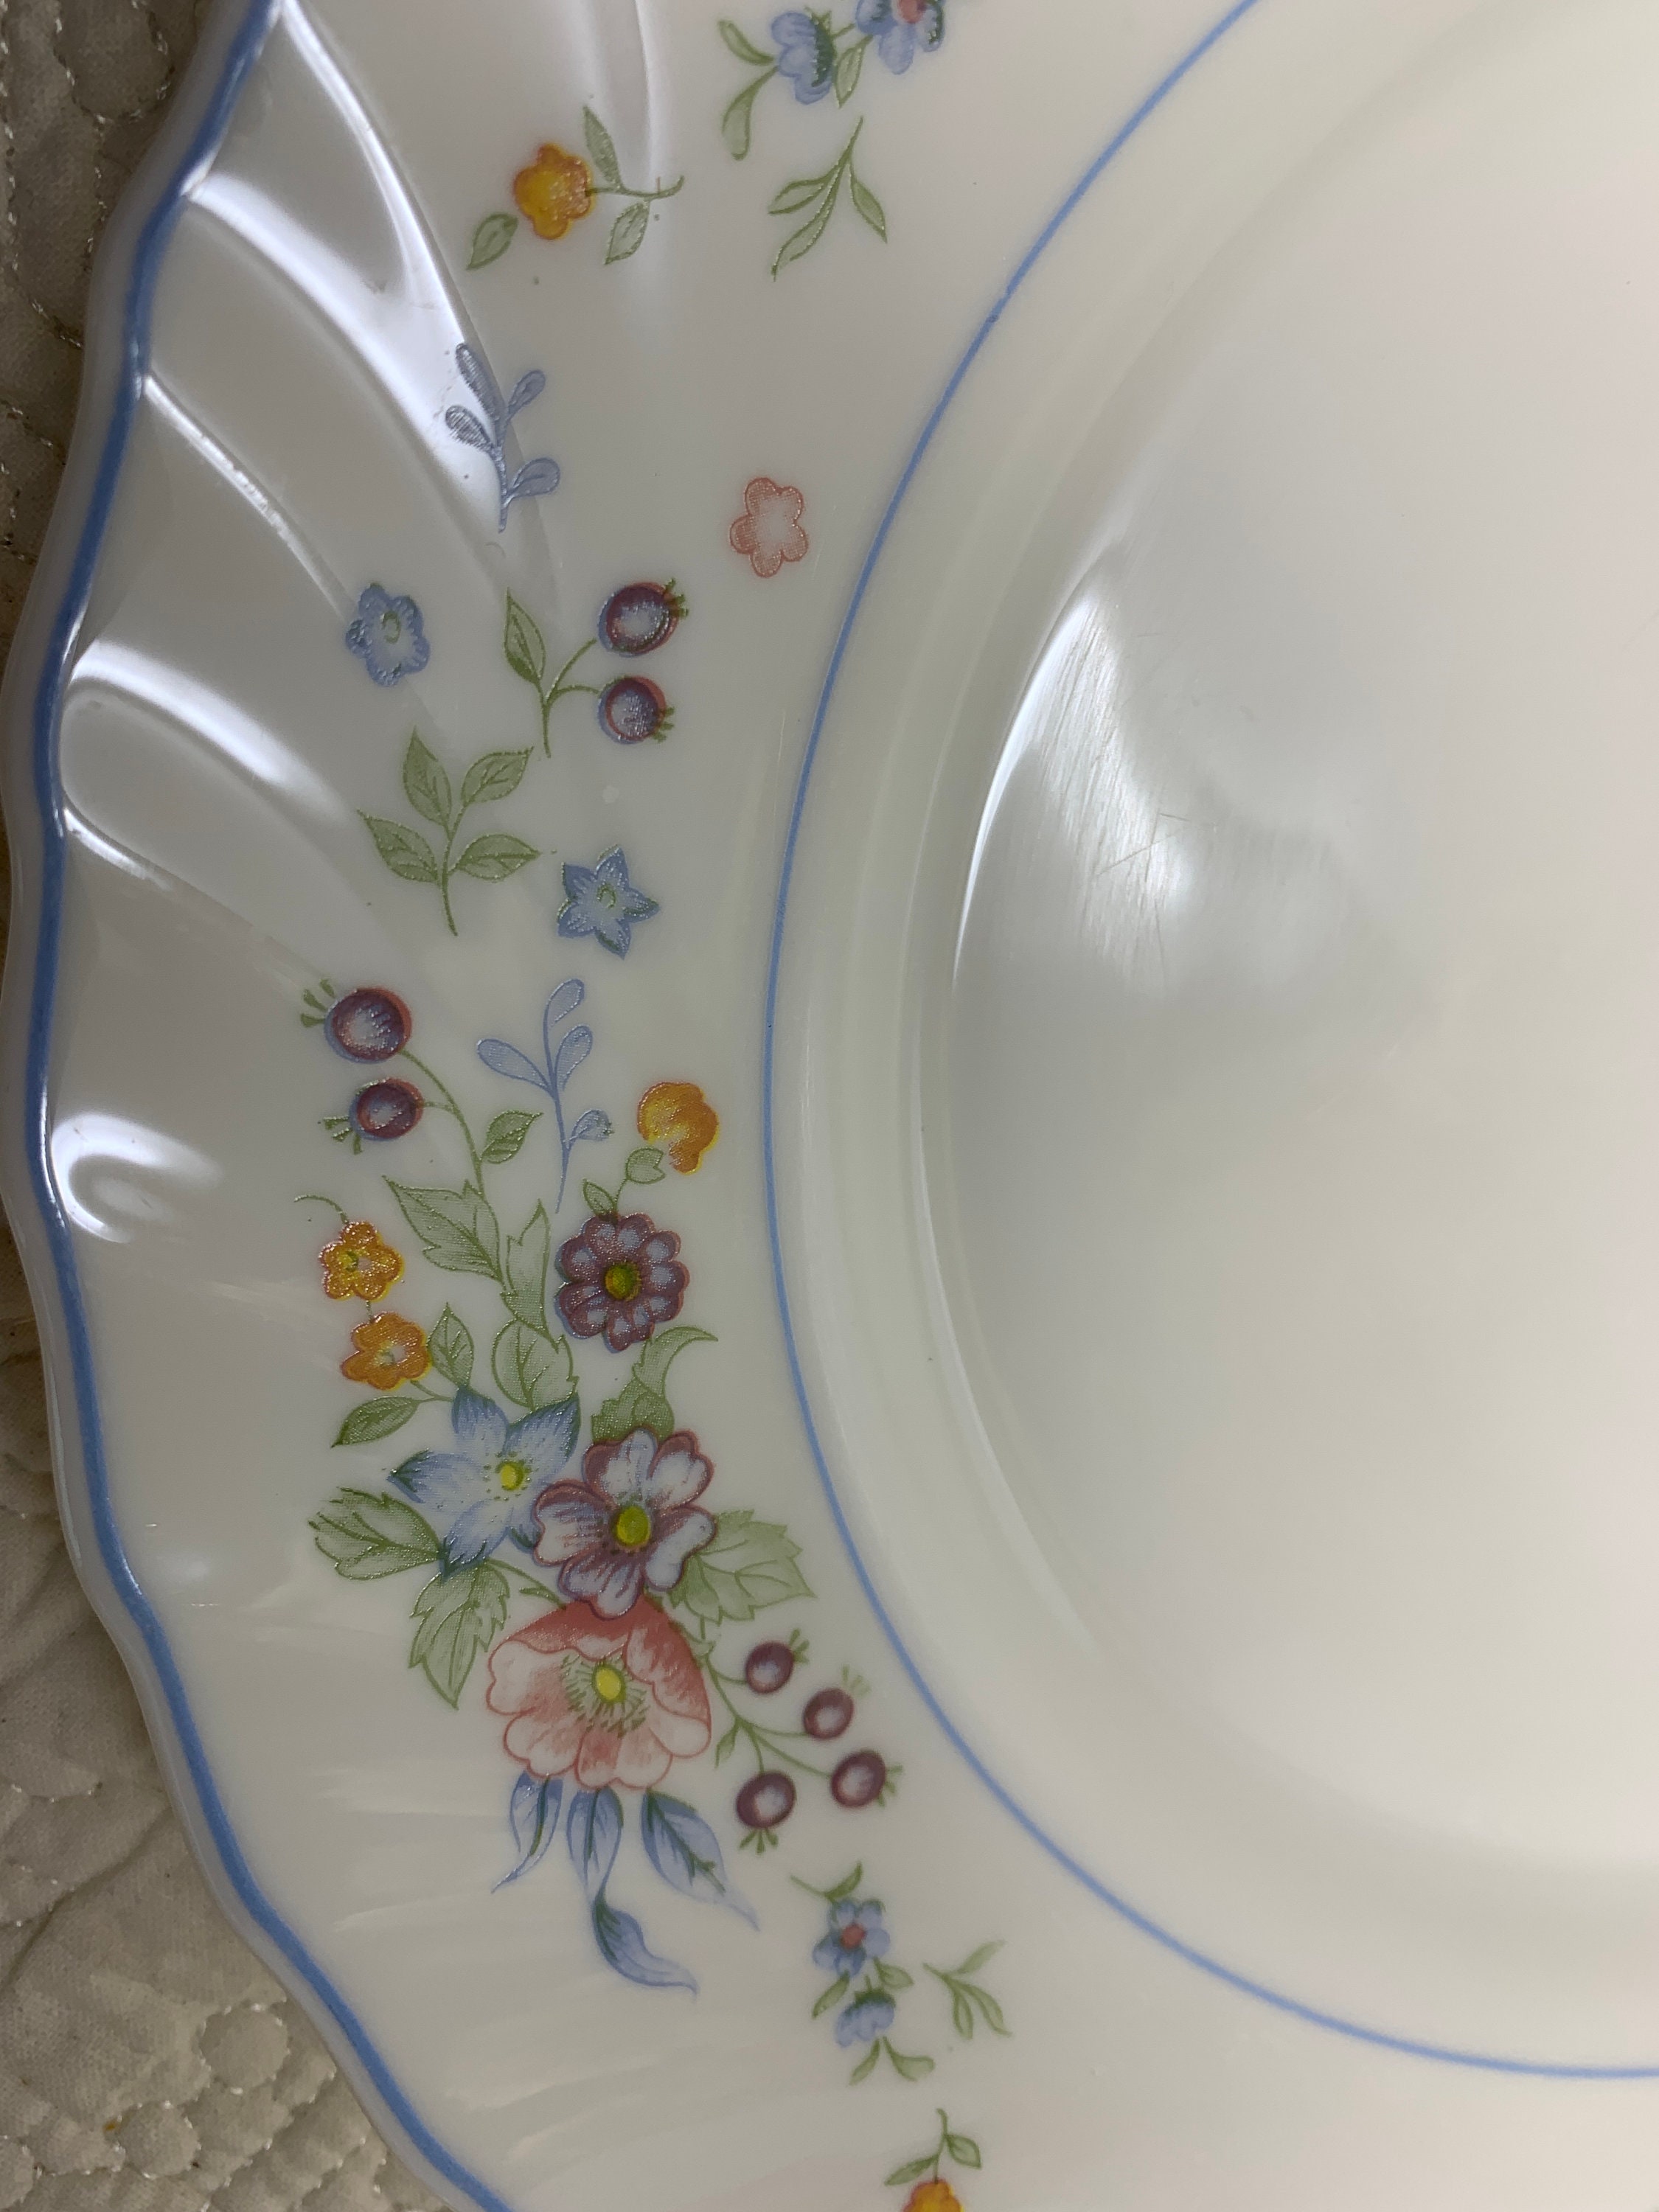 Arcopal France Honorine Blue Floral Glass Dishes Soup Or Salad Bowls Set Of  3